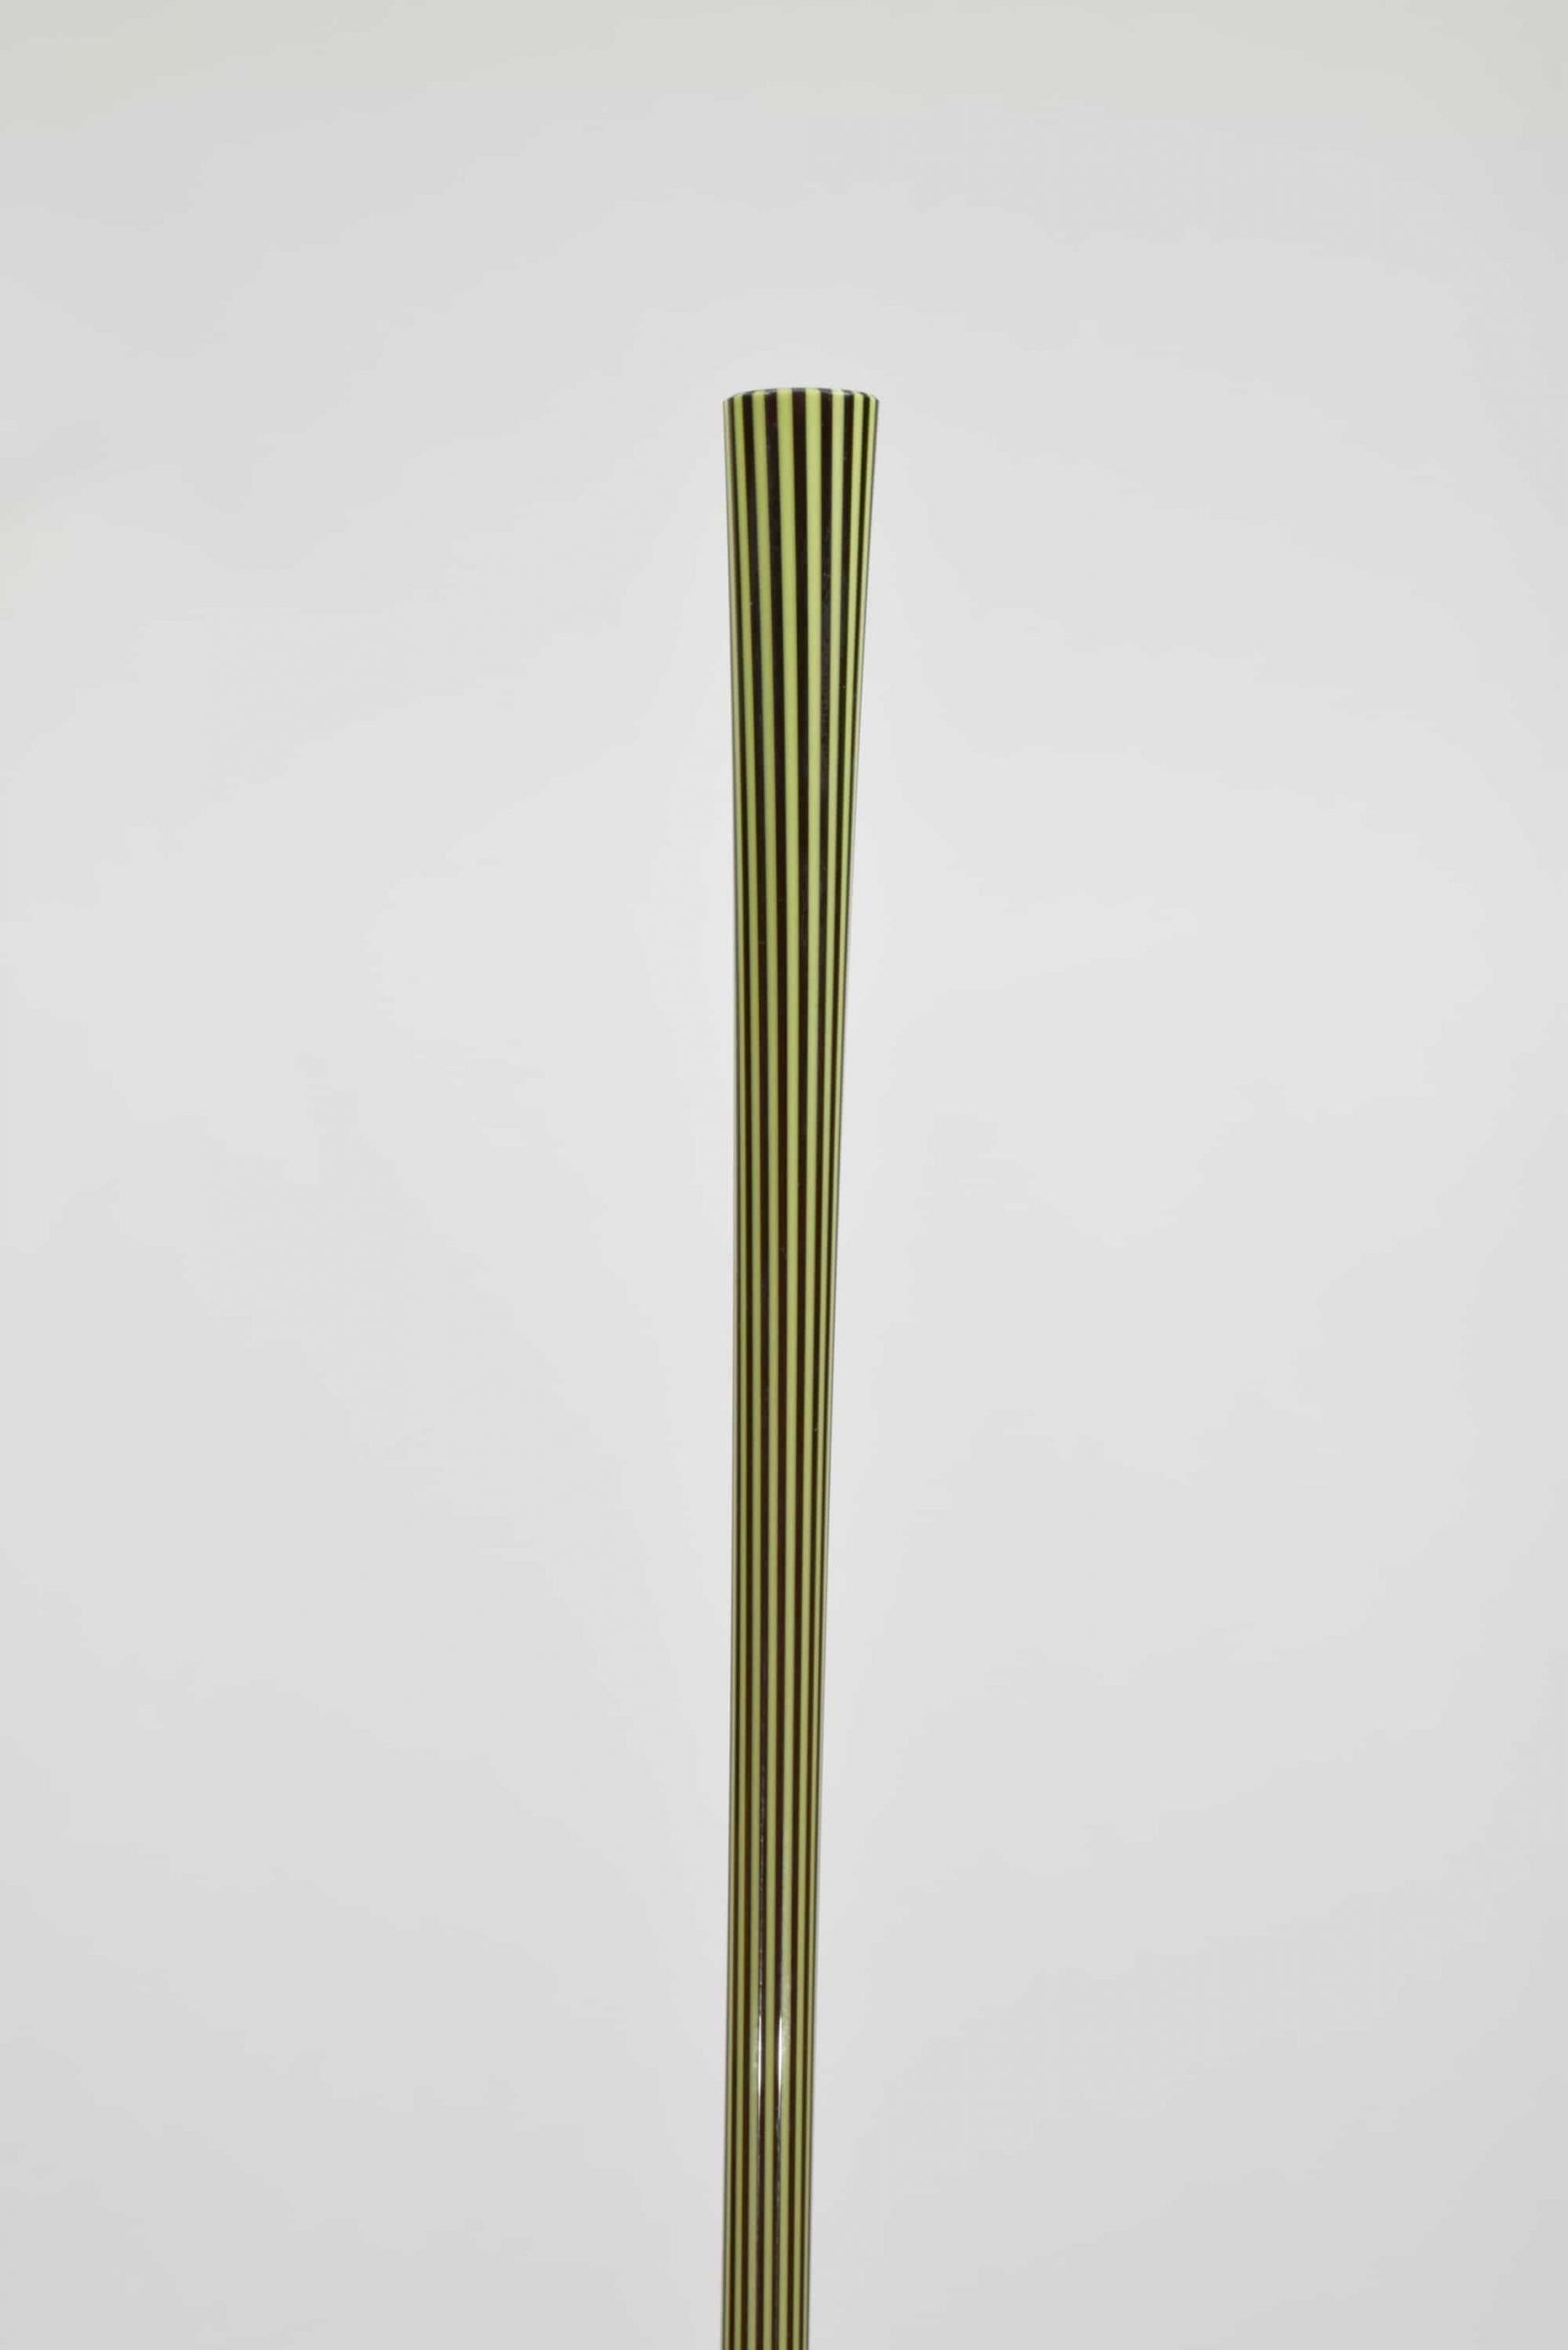 Flötenvase aus Muranoglas